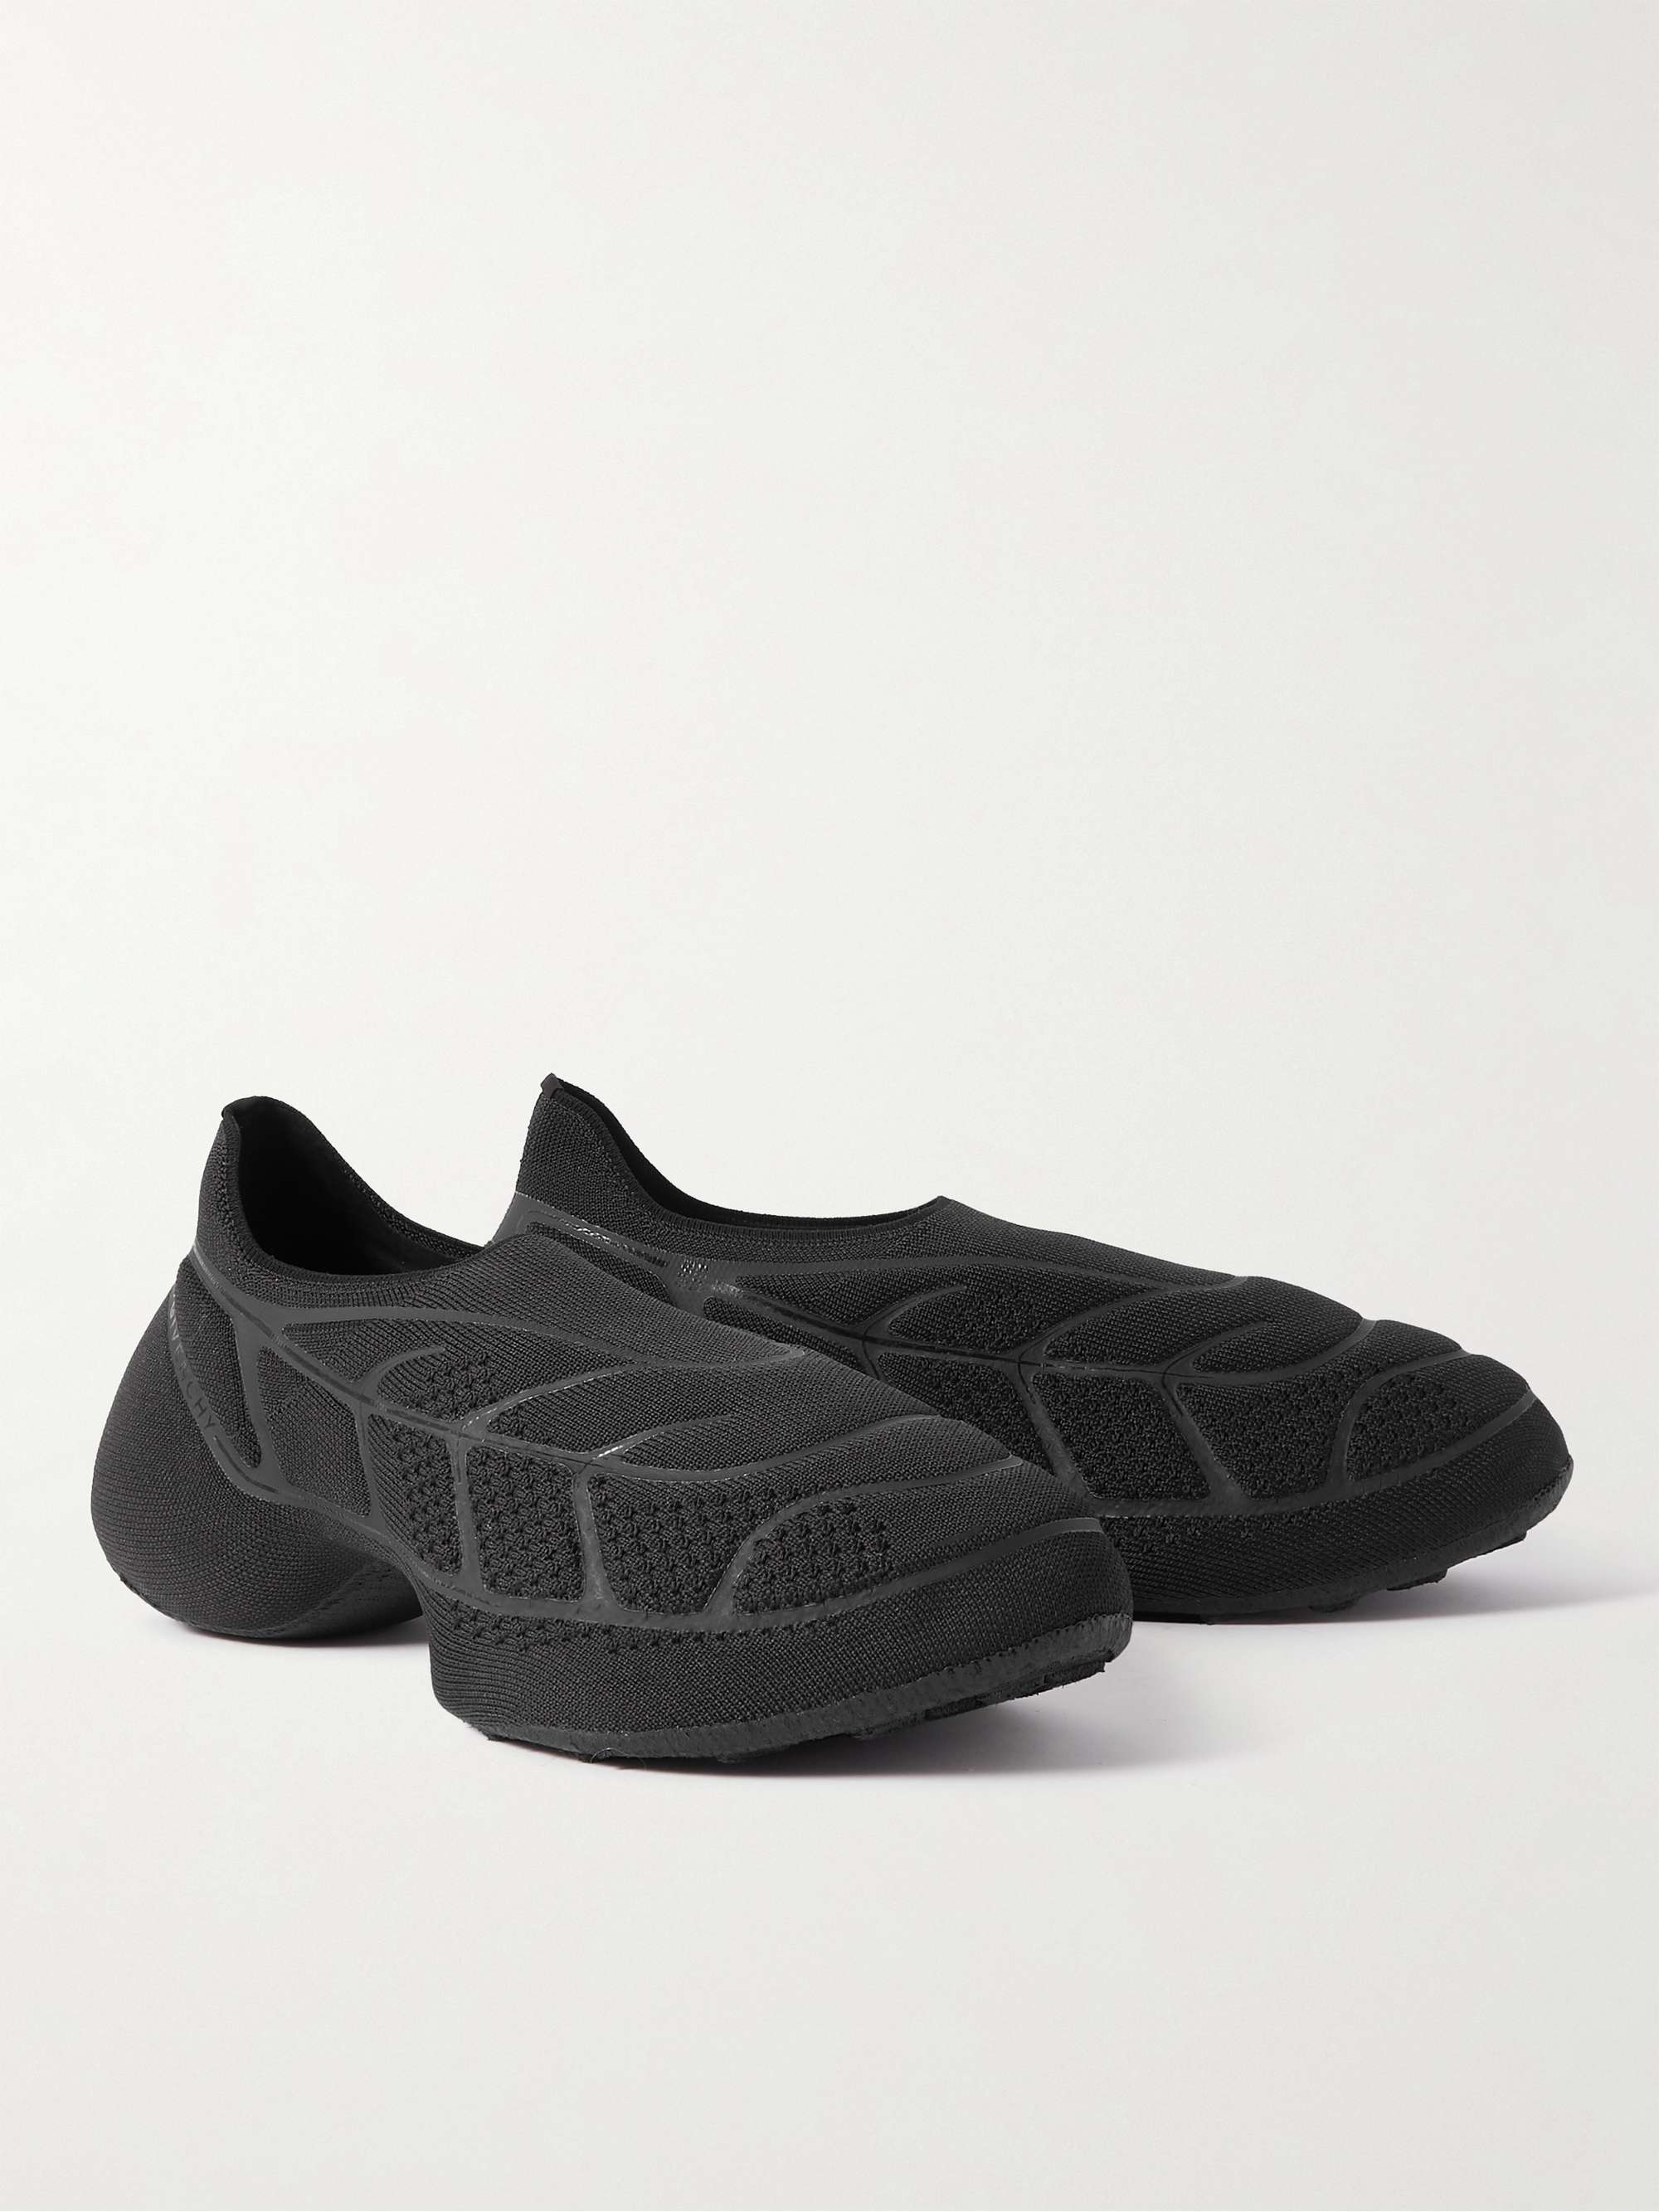 GIVENCHY TK-360 Plus Stretch-Knit Slip-On Sneakers for Men | MR PORTER